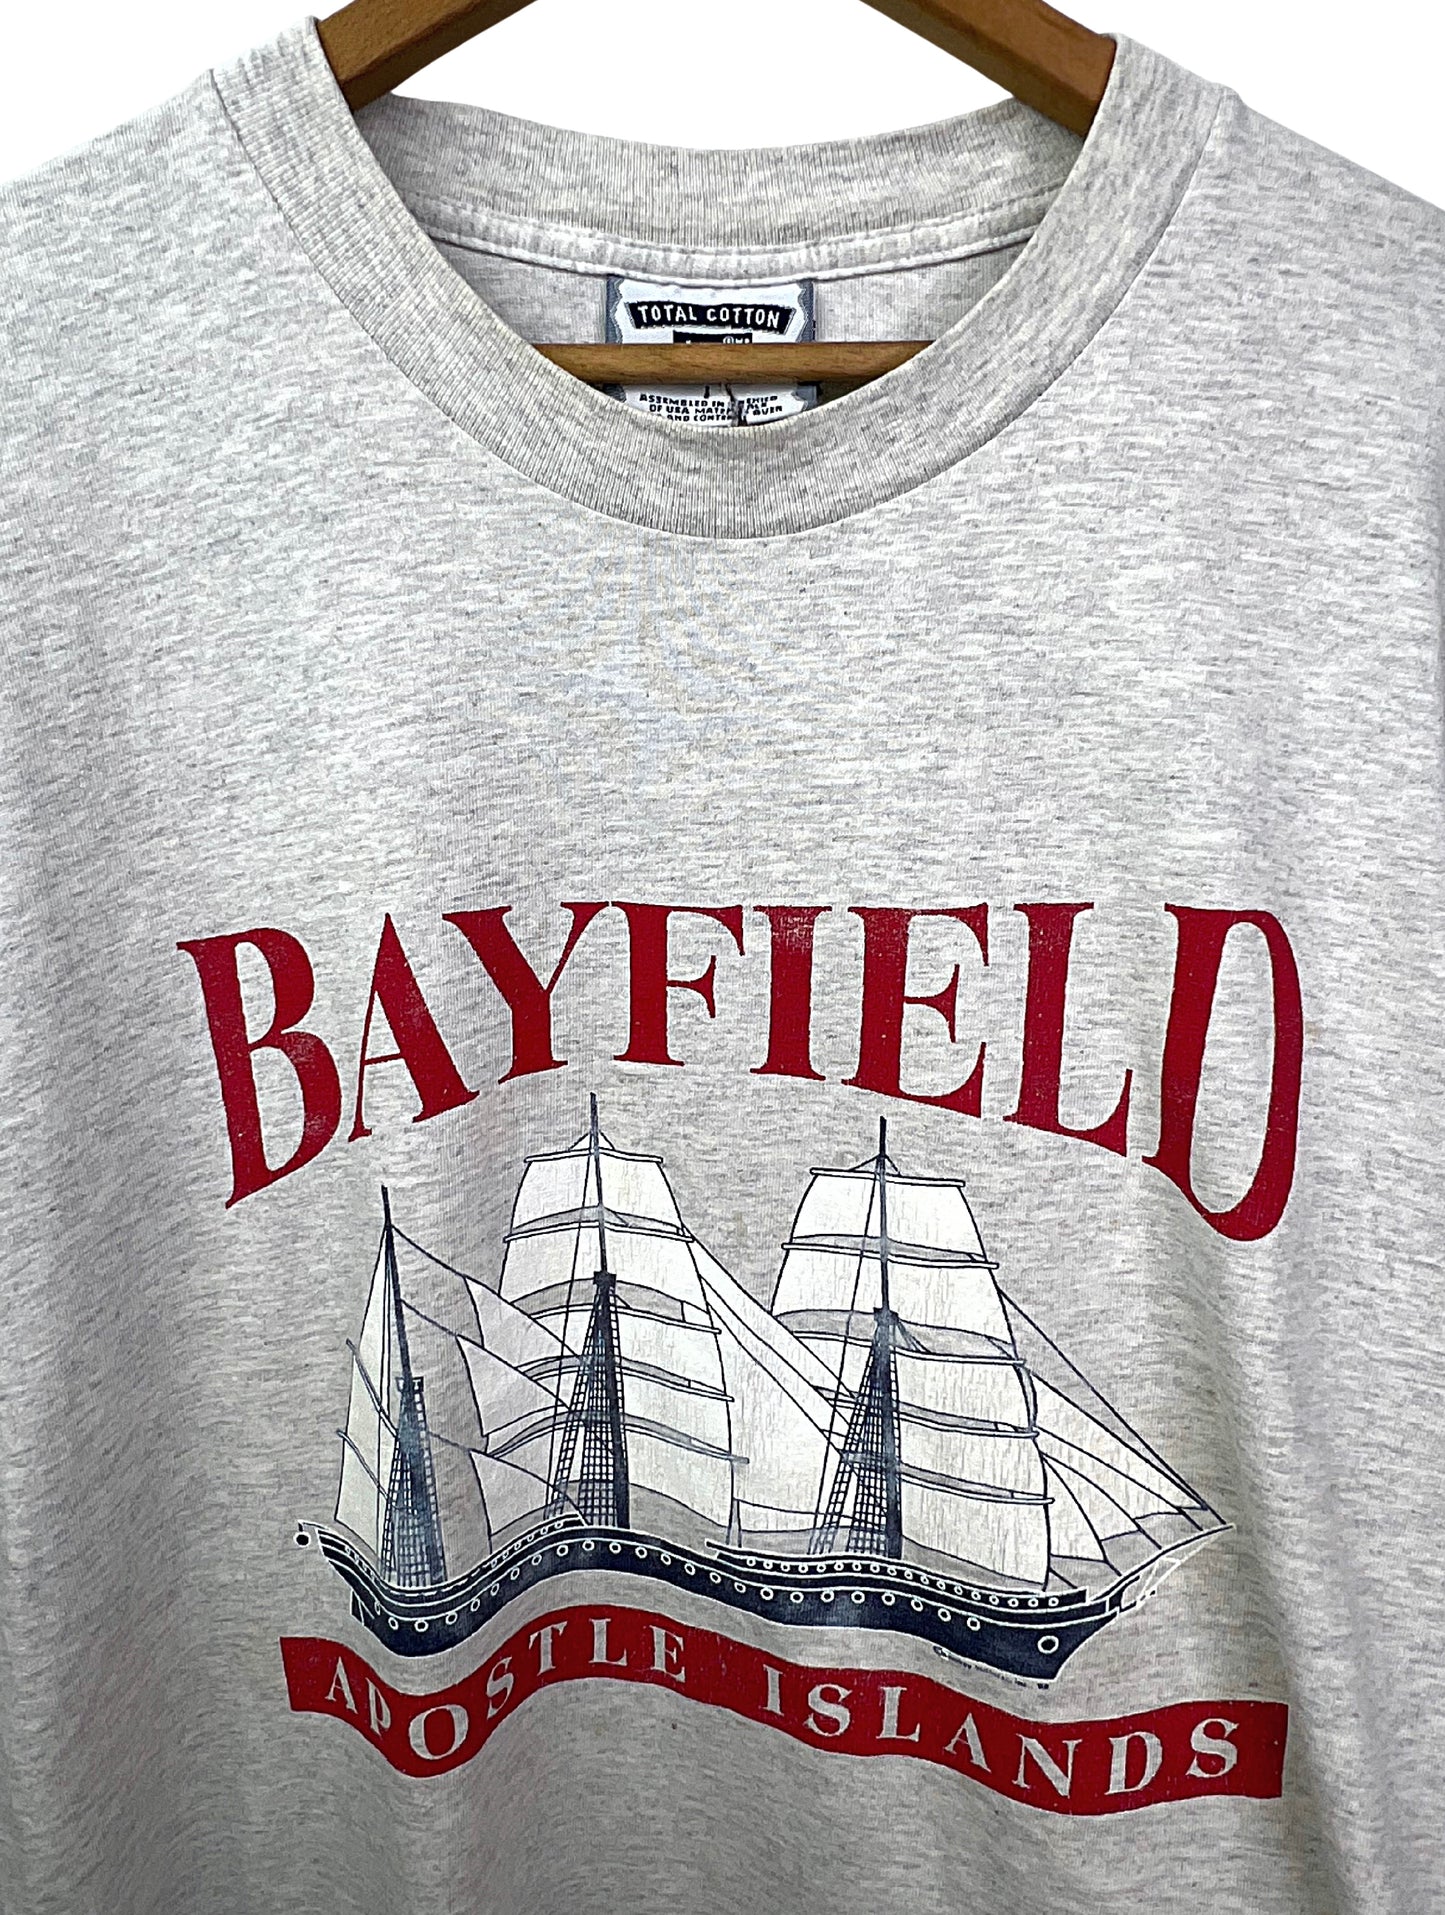 90’s Bayfield Apostle Islands Sailboat T-shirt Size Large